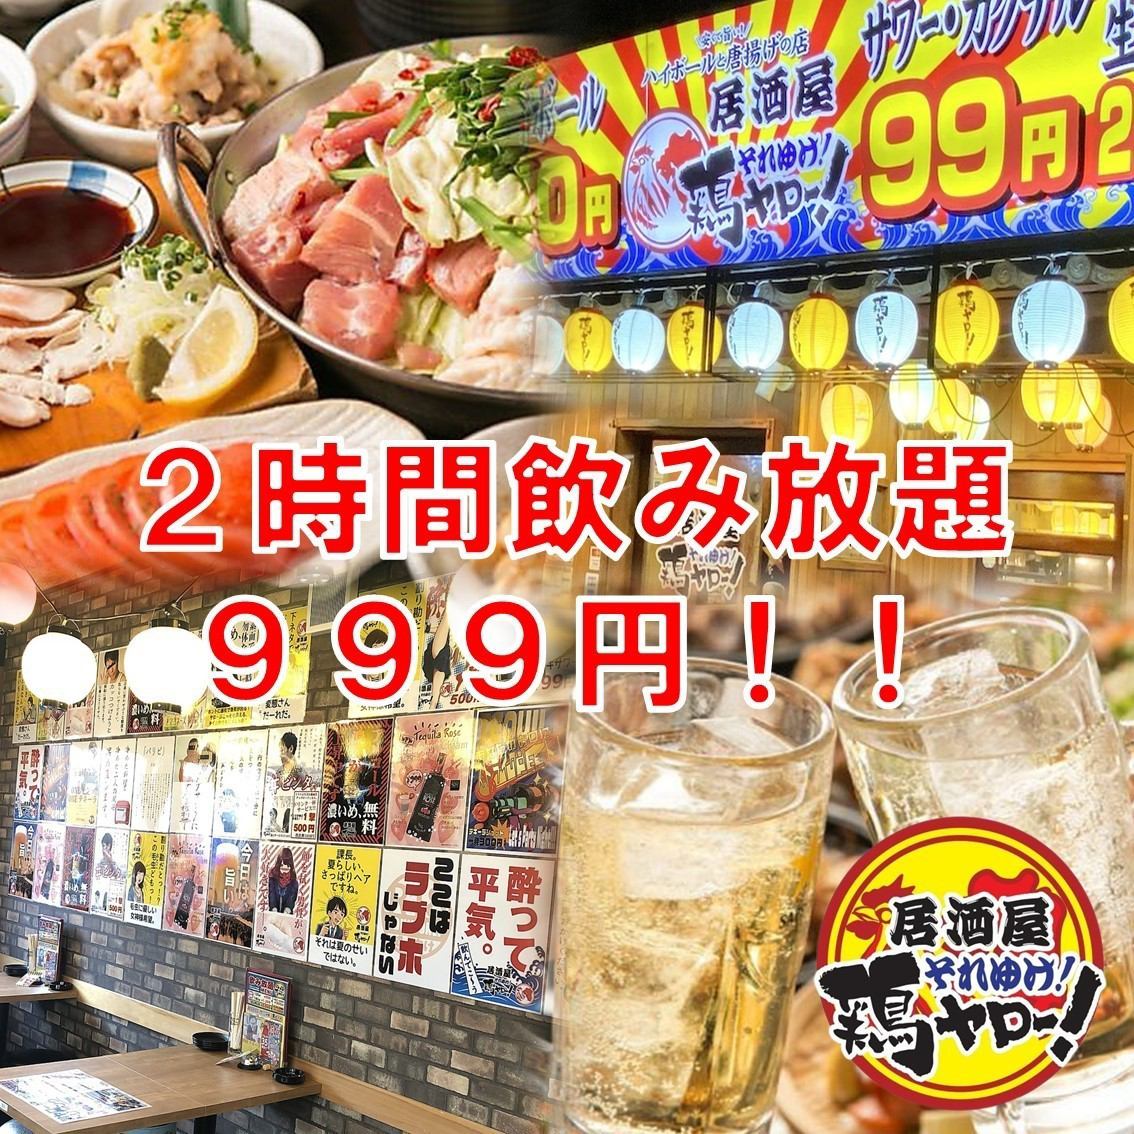 Kaku highball 50 yen! Sour, wine, soft drinks 99 yen! Draft beer 299 yen